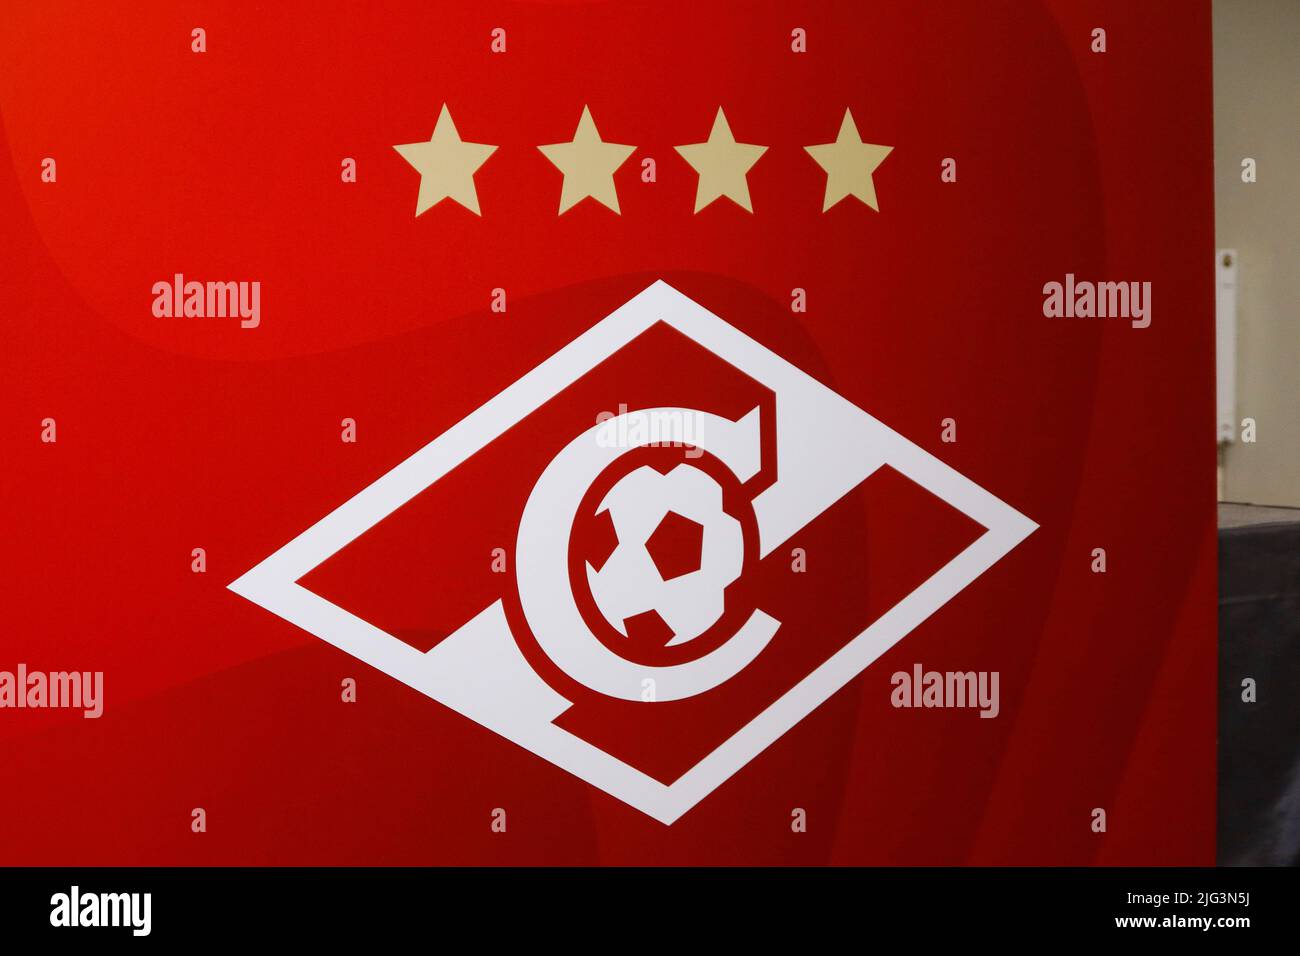 FC Spartak Moscow Football Logo Ultras, emblem, label png